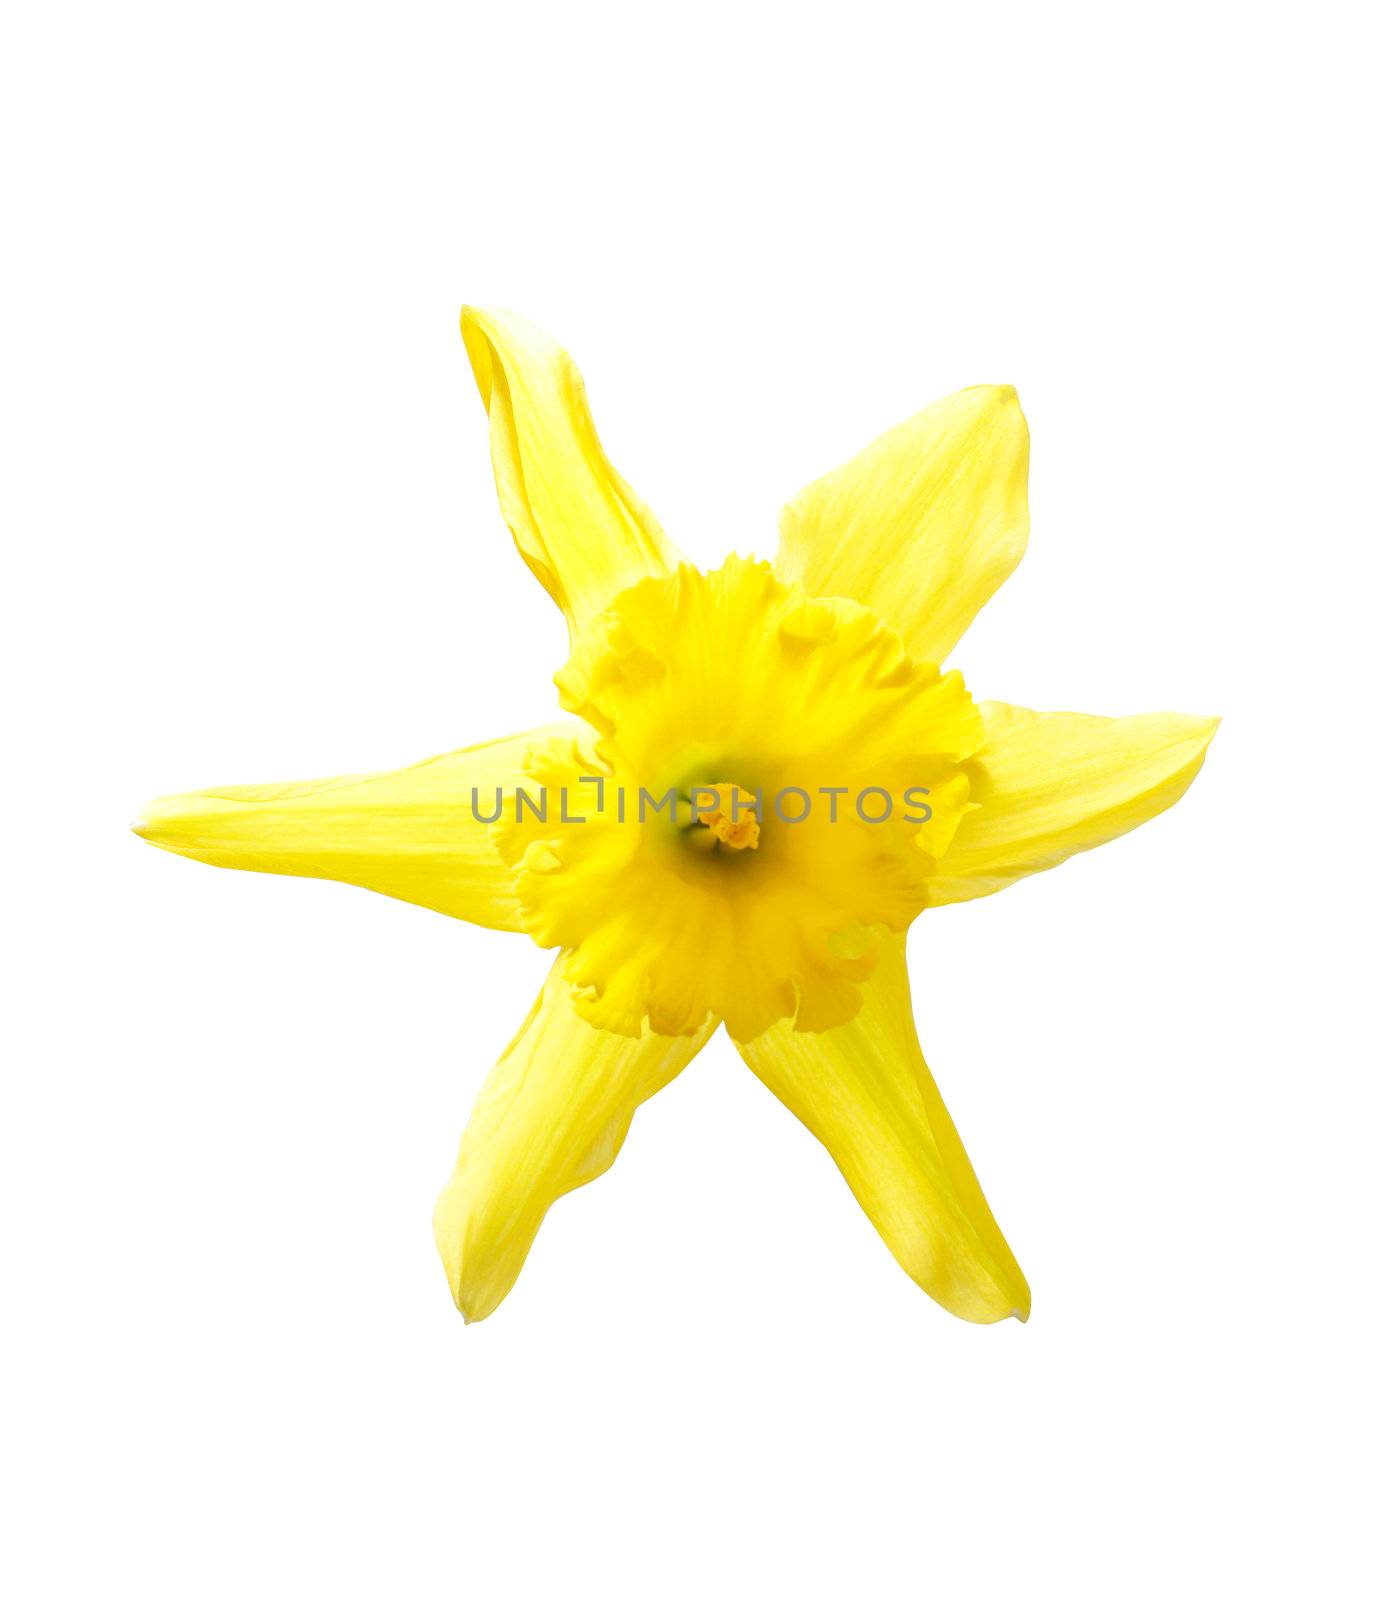 Daffodil by leeser